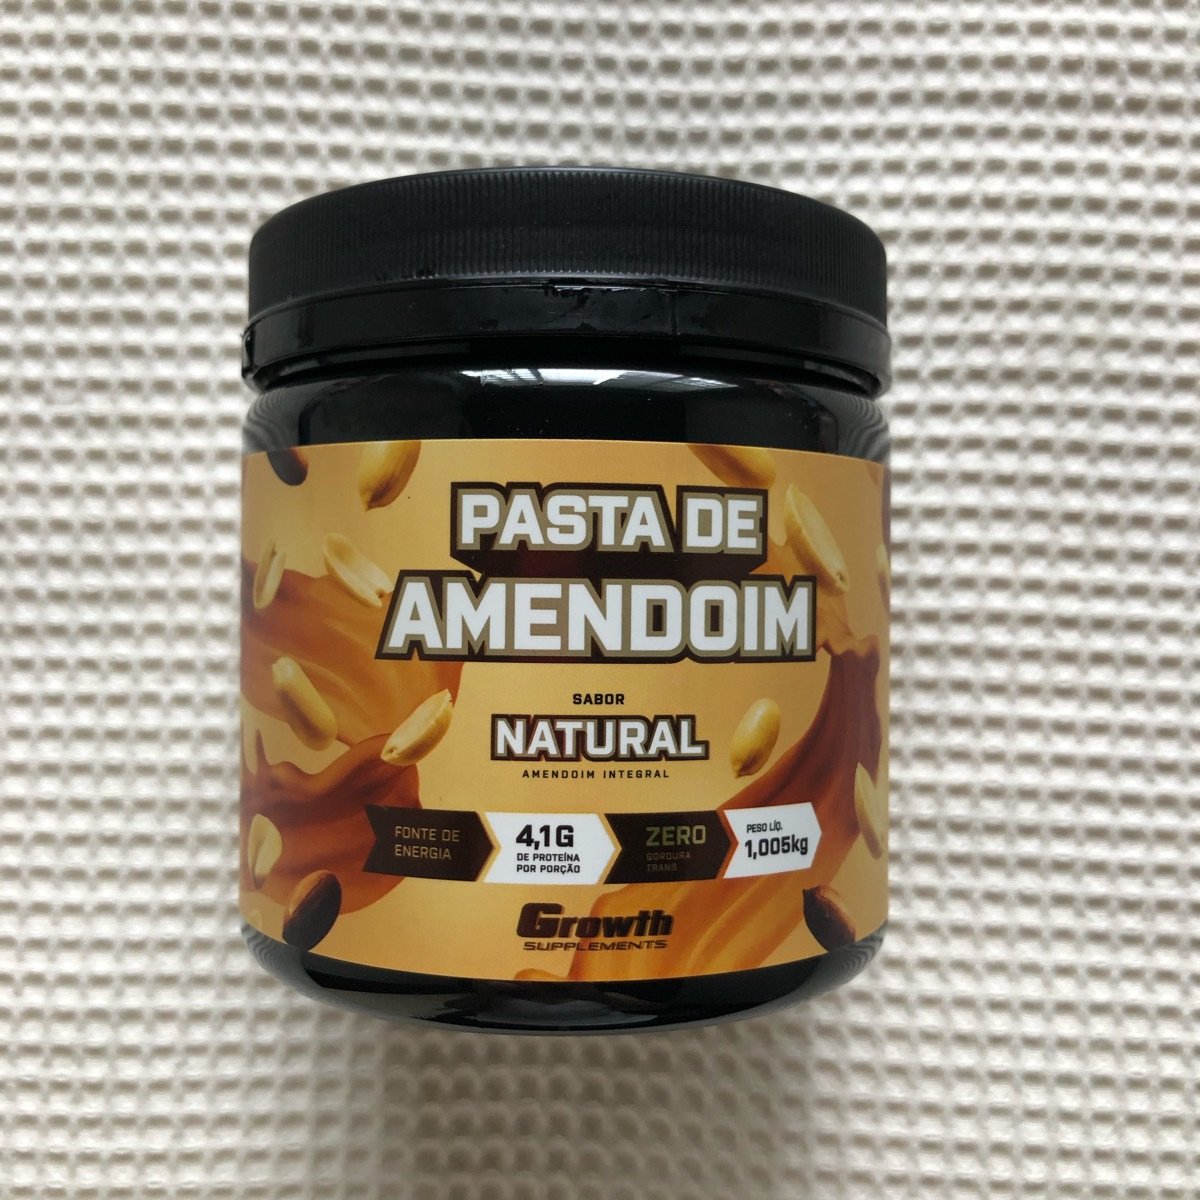 Growth Supplements Pasta De Amendoim Reviews